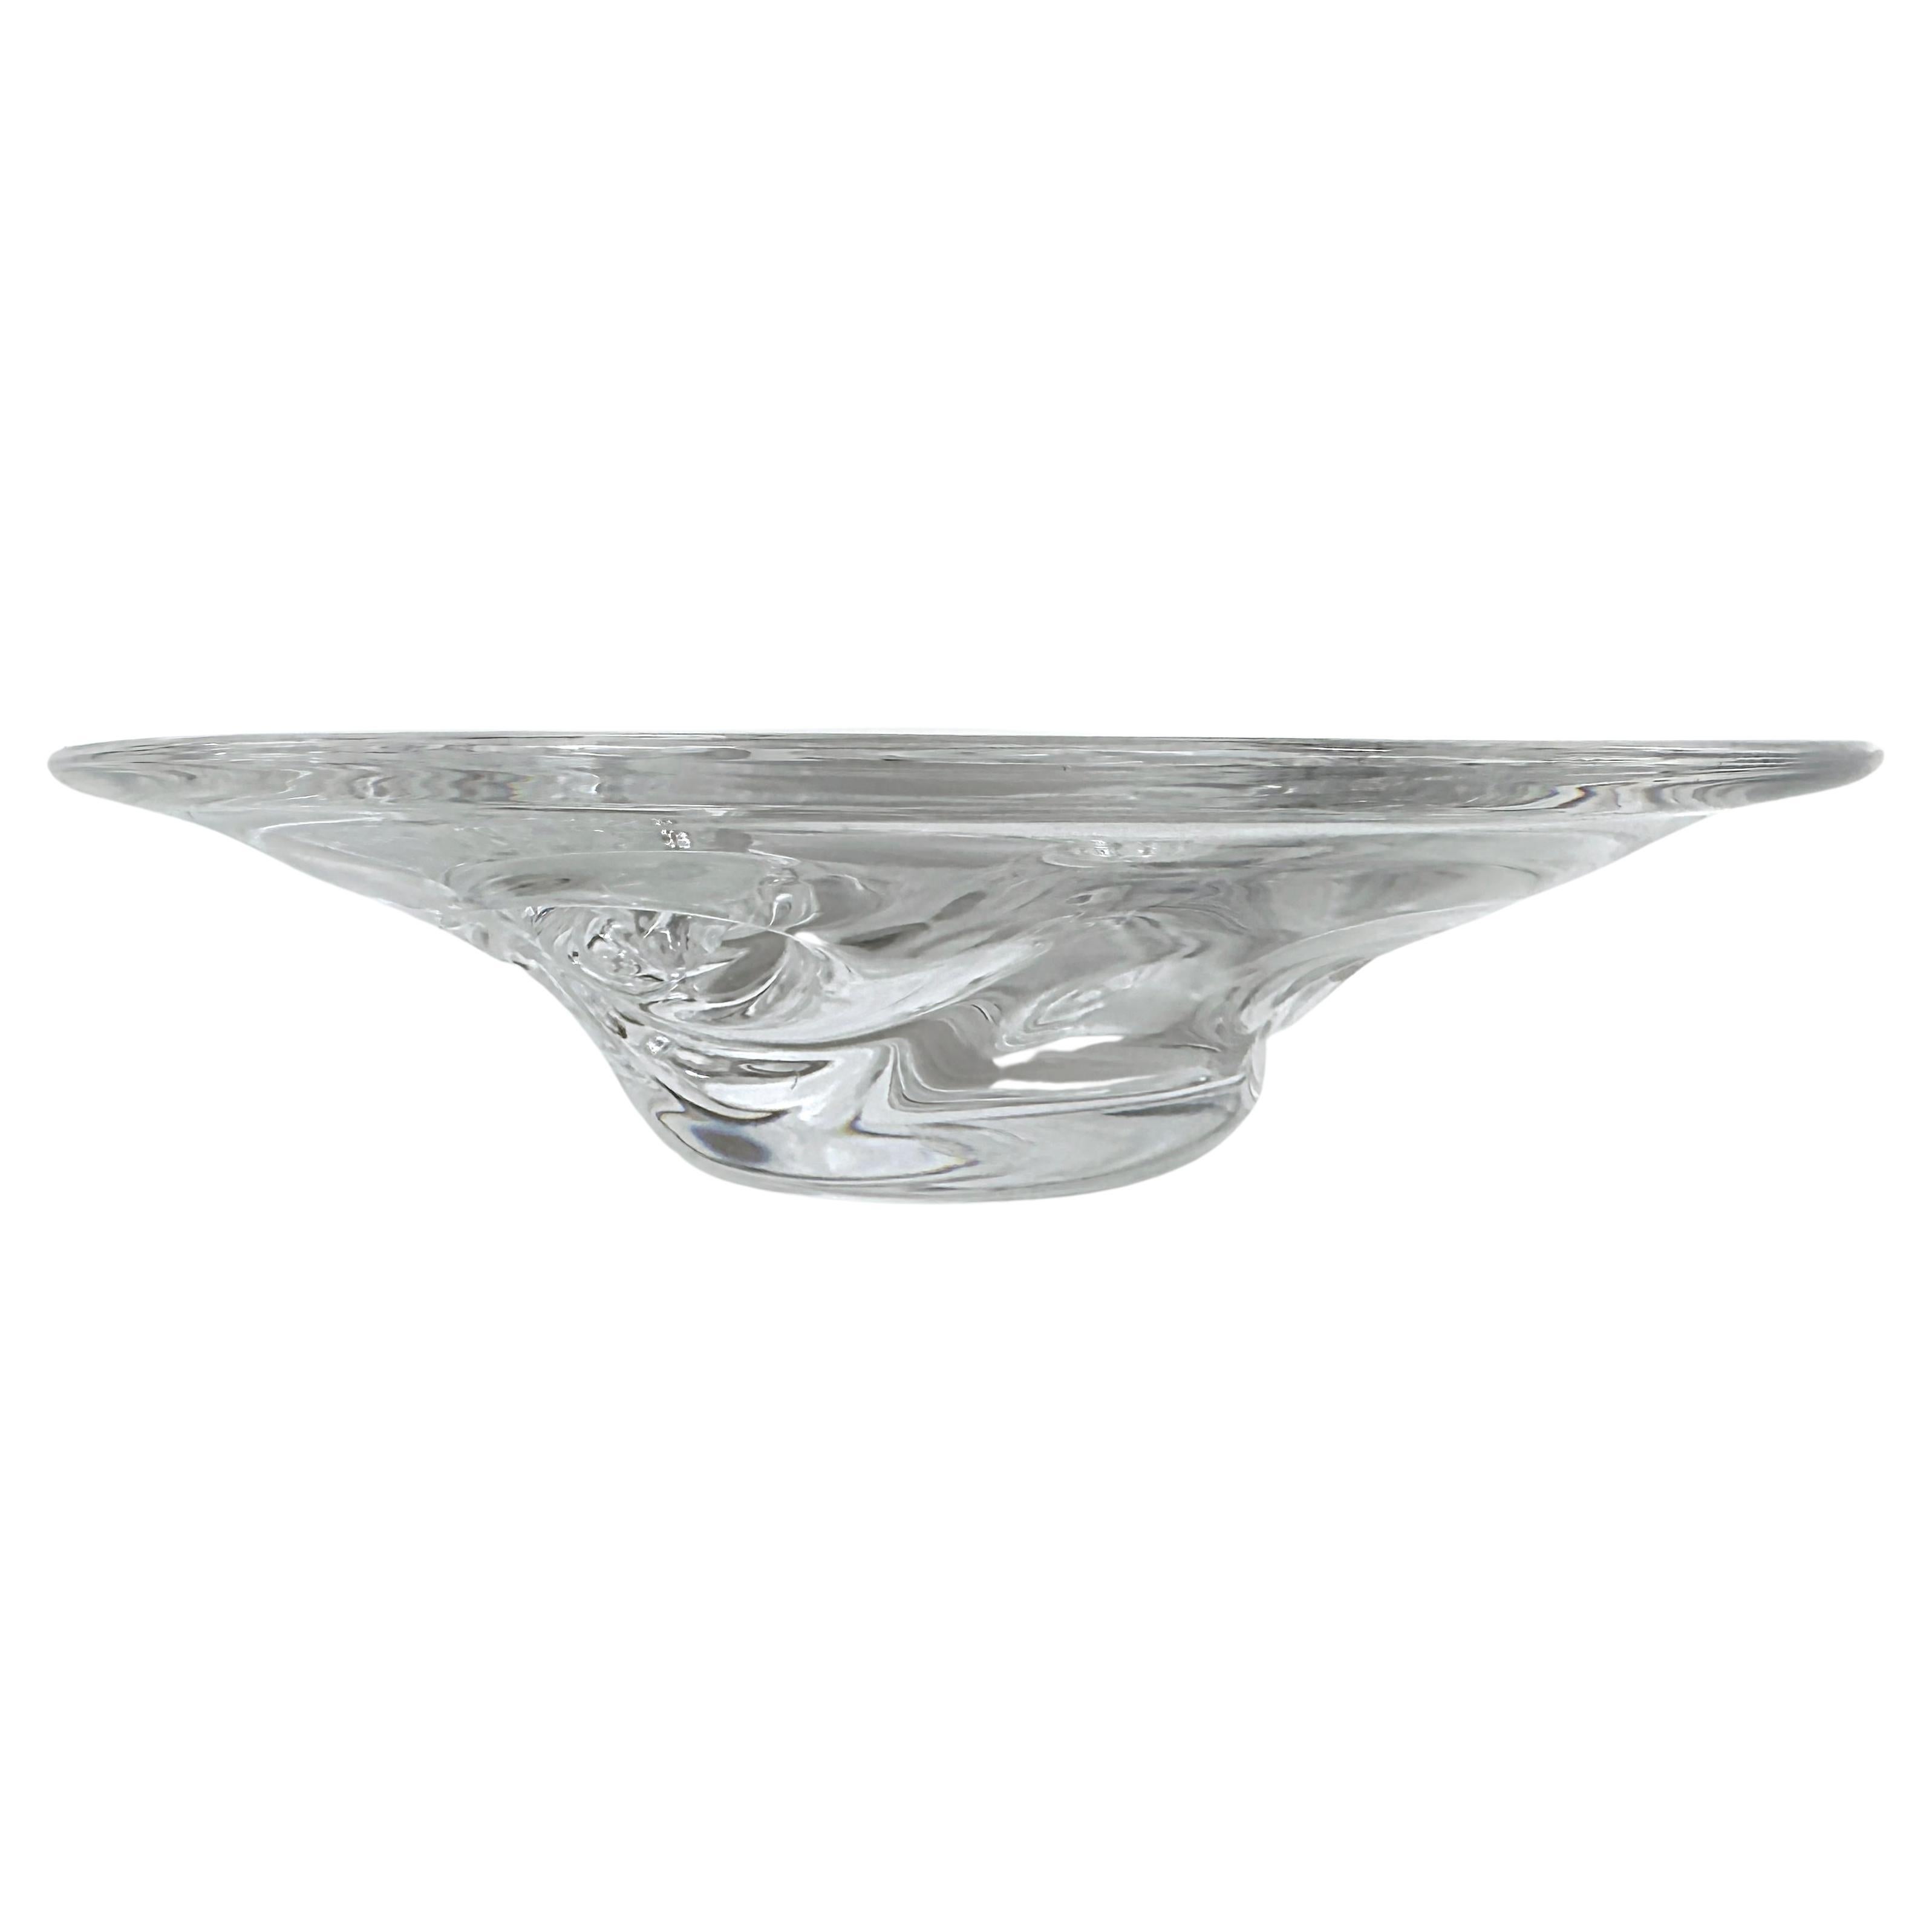 Kosta Boda Sweden Goran Warff Modernist Art Glass Bowl with Swirl Designs For Sale